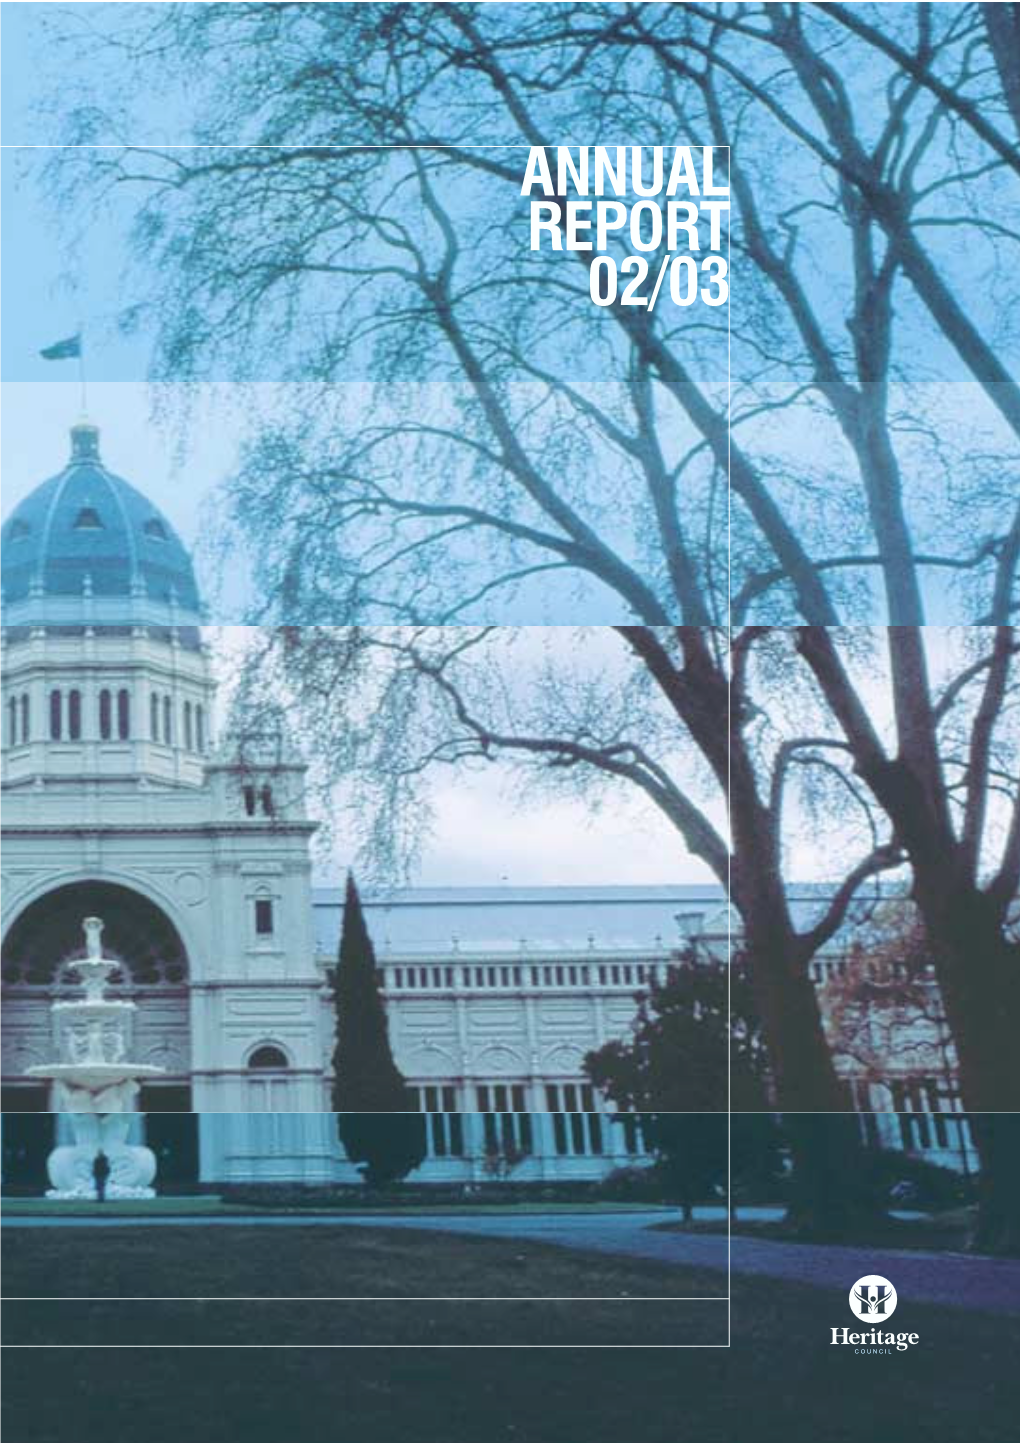 Annual Report 02/03 Carlton Gardens, Melbourne (Hi501) Photograph by Janusz Molinski